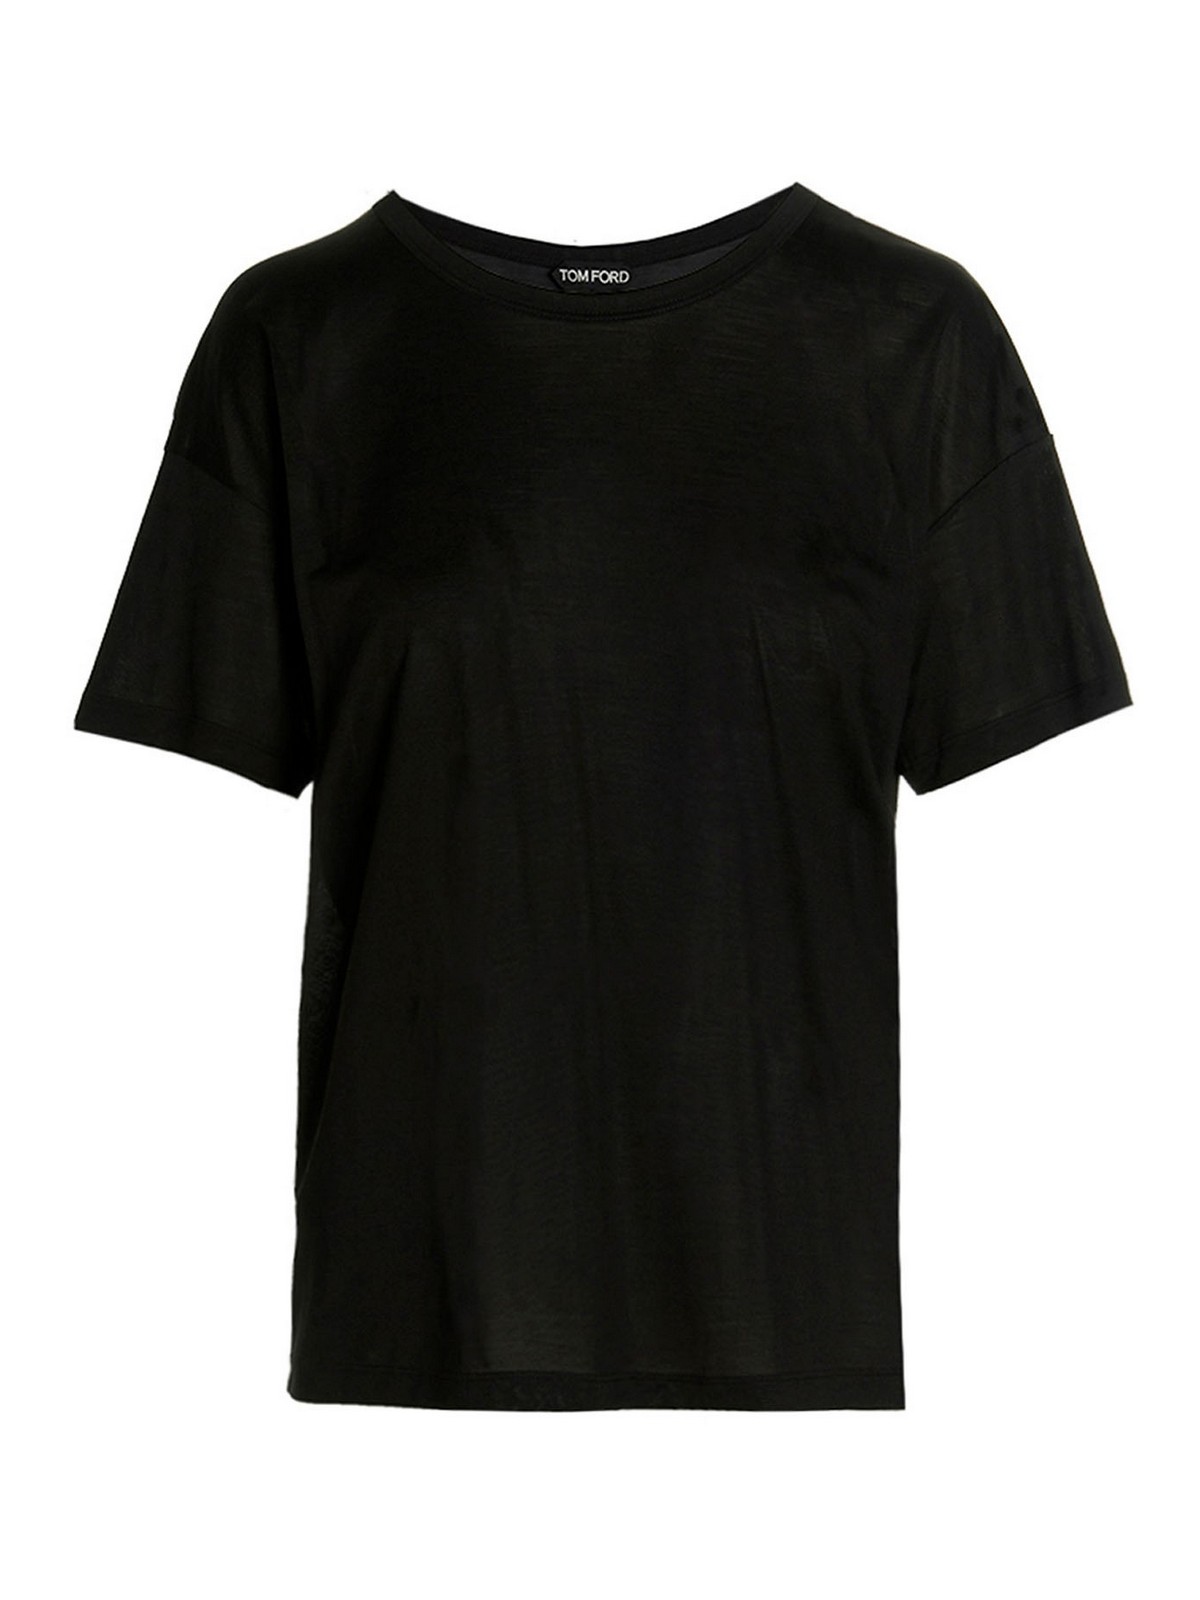 Tom Ford Silk T-shirt In Black